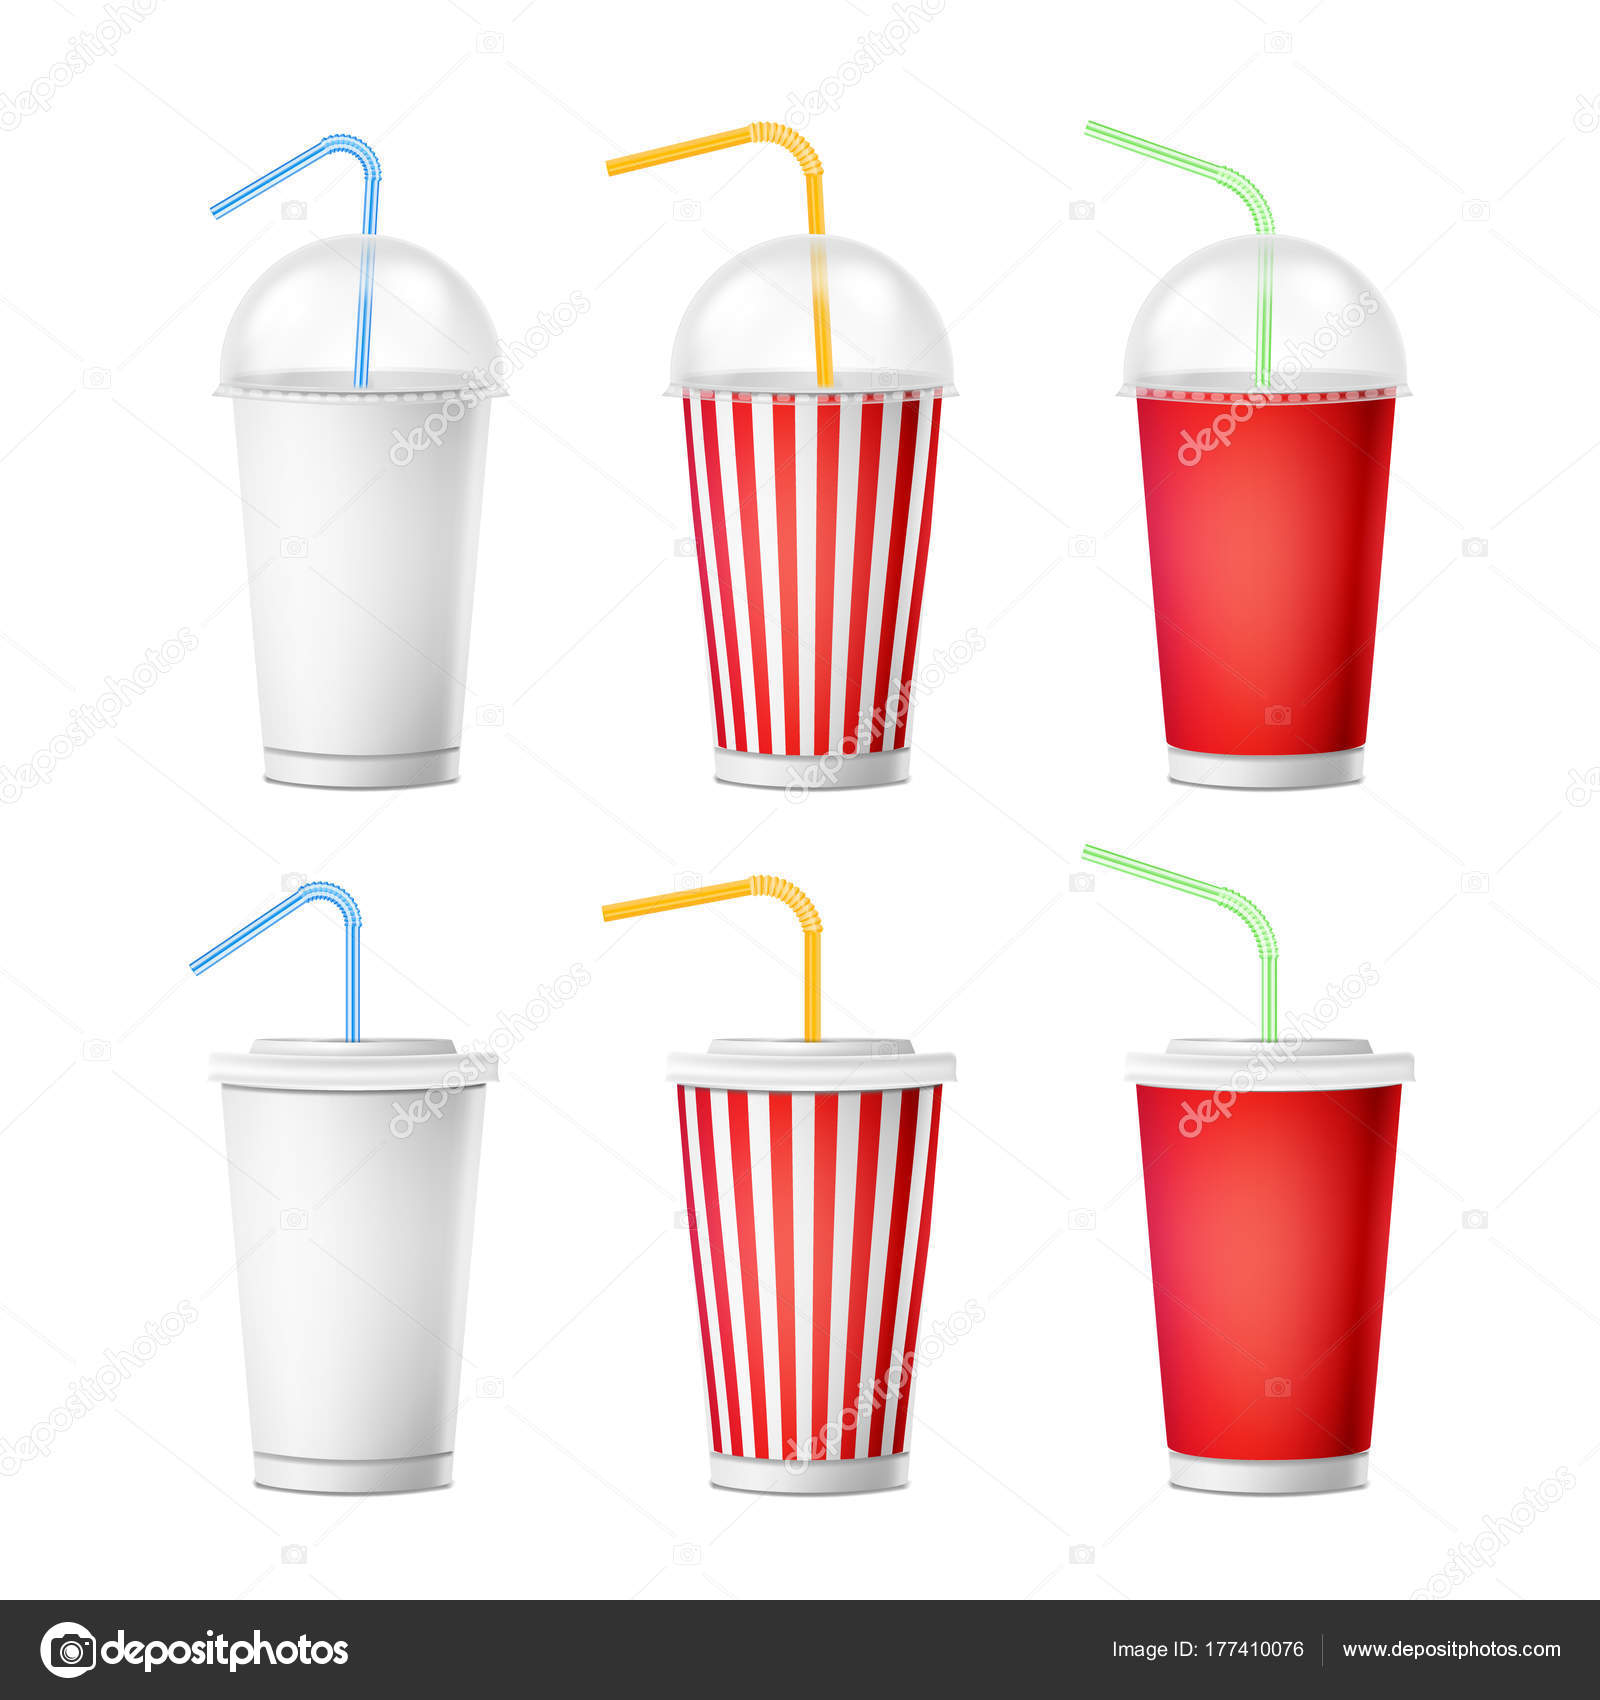 https://st3.depositphotos.com/4111759/17741/v/1600/depositphotos_177410076-stock-illustration-soda-cup-template-vector-3d.jpg